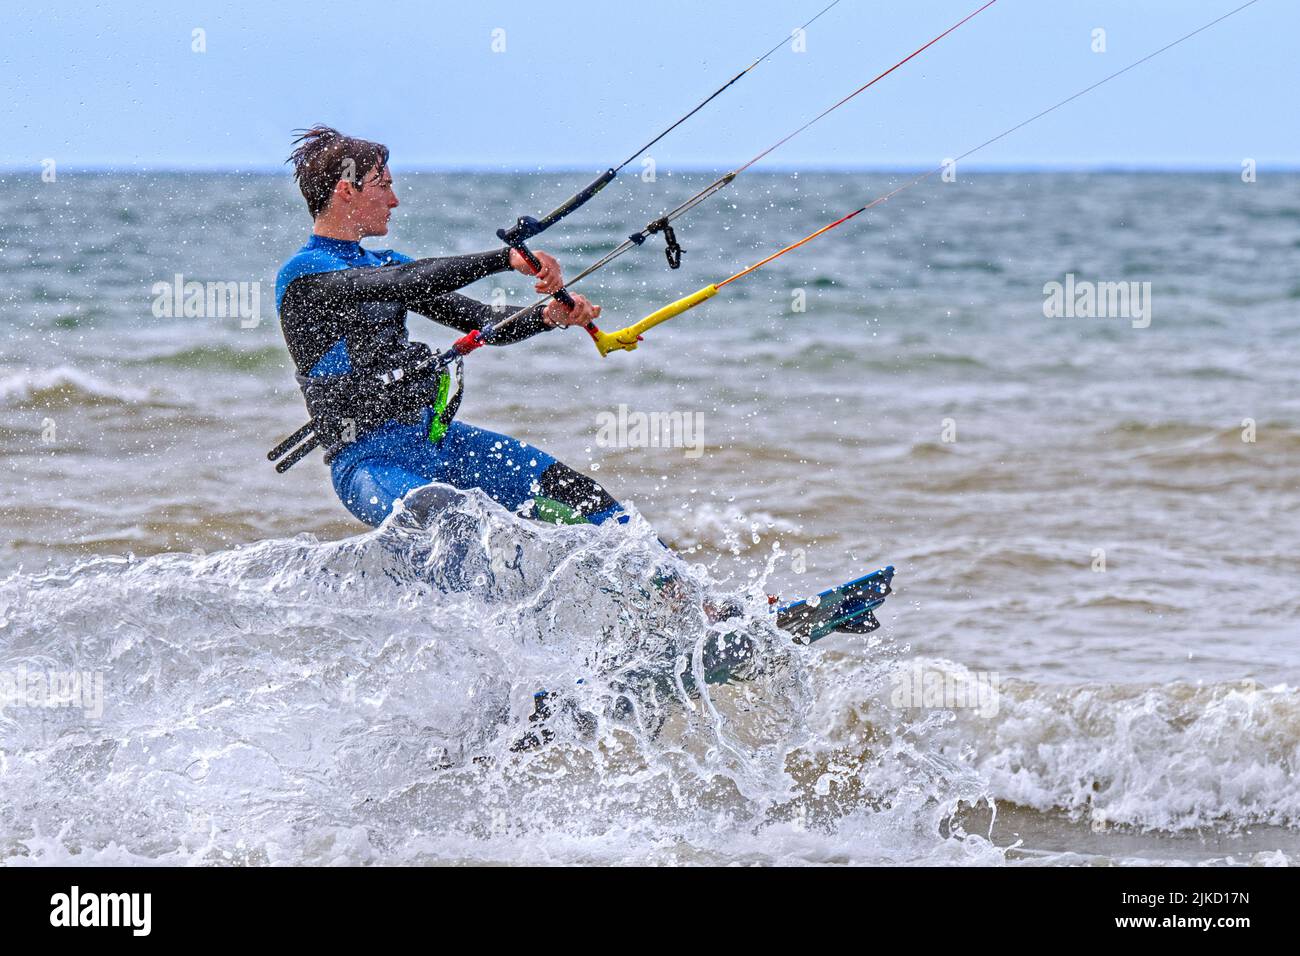 Kiteboarder joven / kitesurfer usando traje de neopreno sobre tabla de twintip kitesurfing en el Mar del Norte Foto de stock